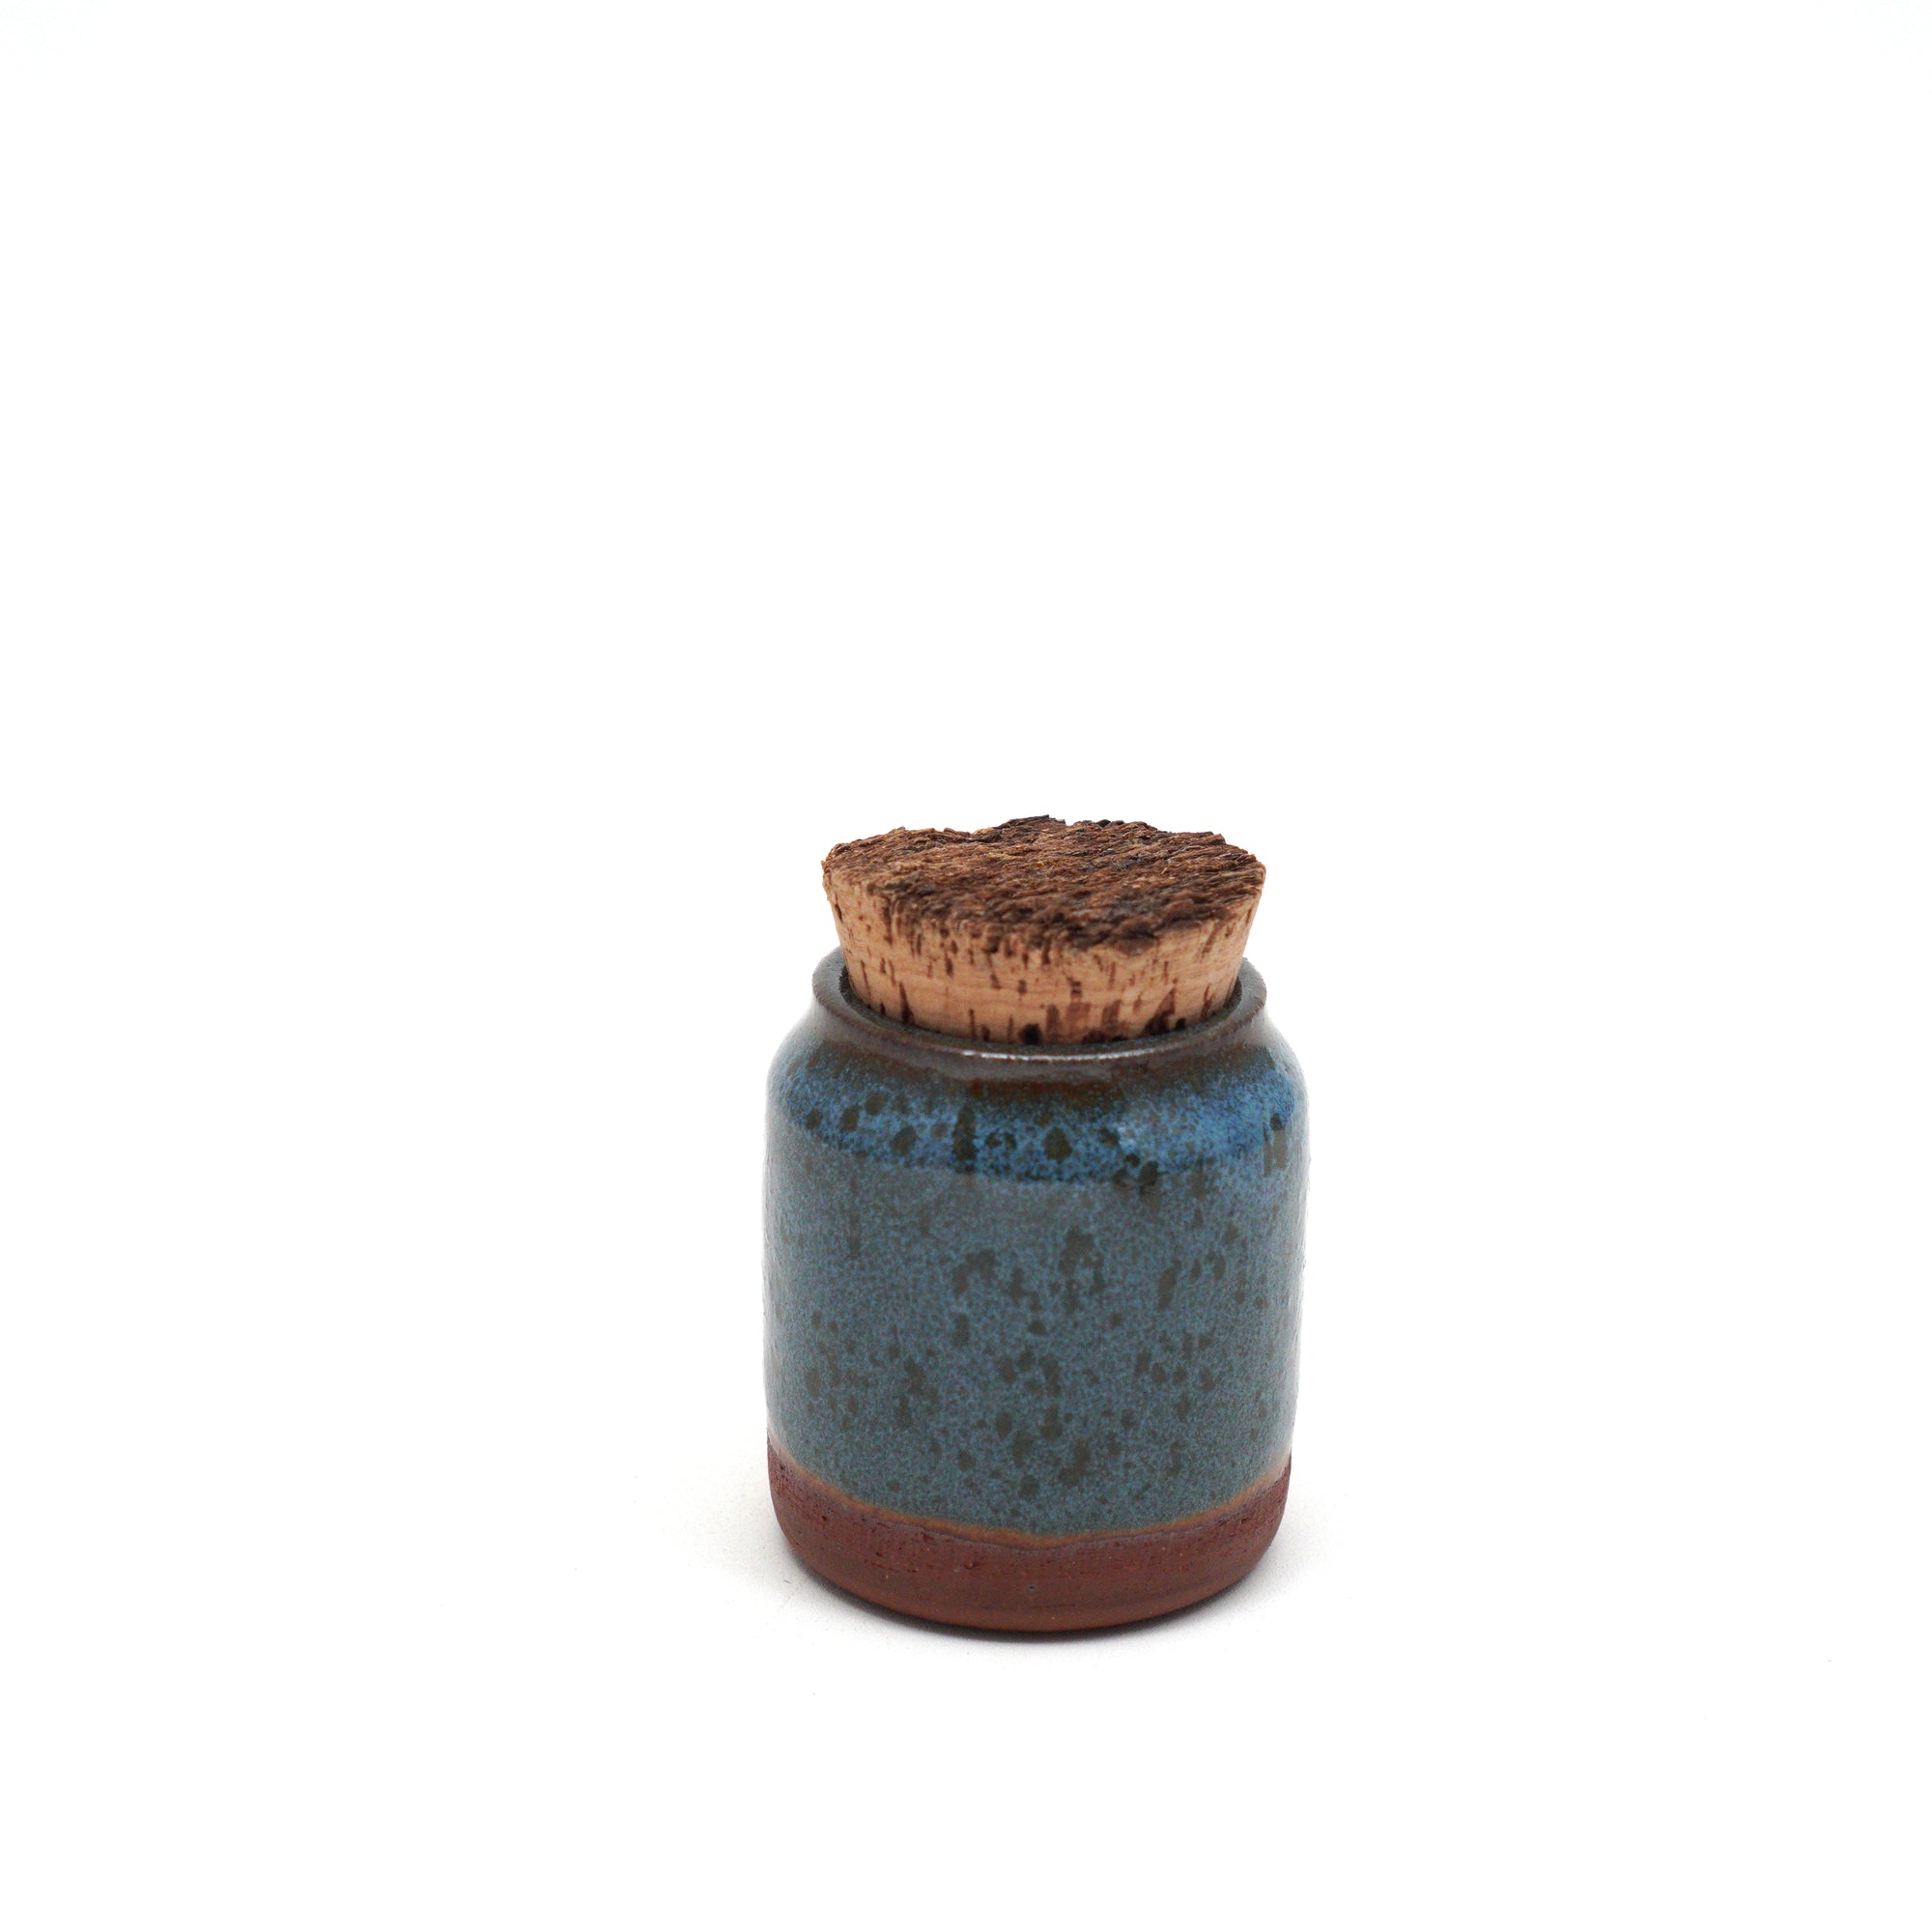 Handmade Ceramic 4oz Corked Jar with a speckled light blue glaze